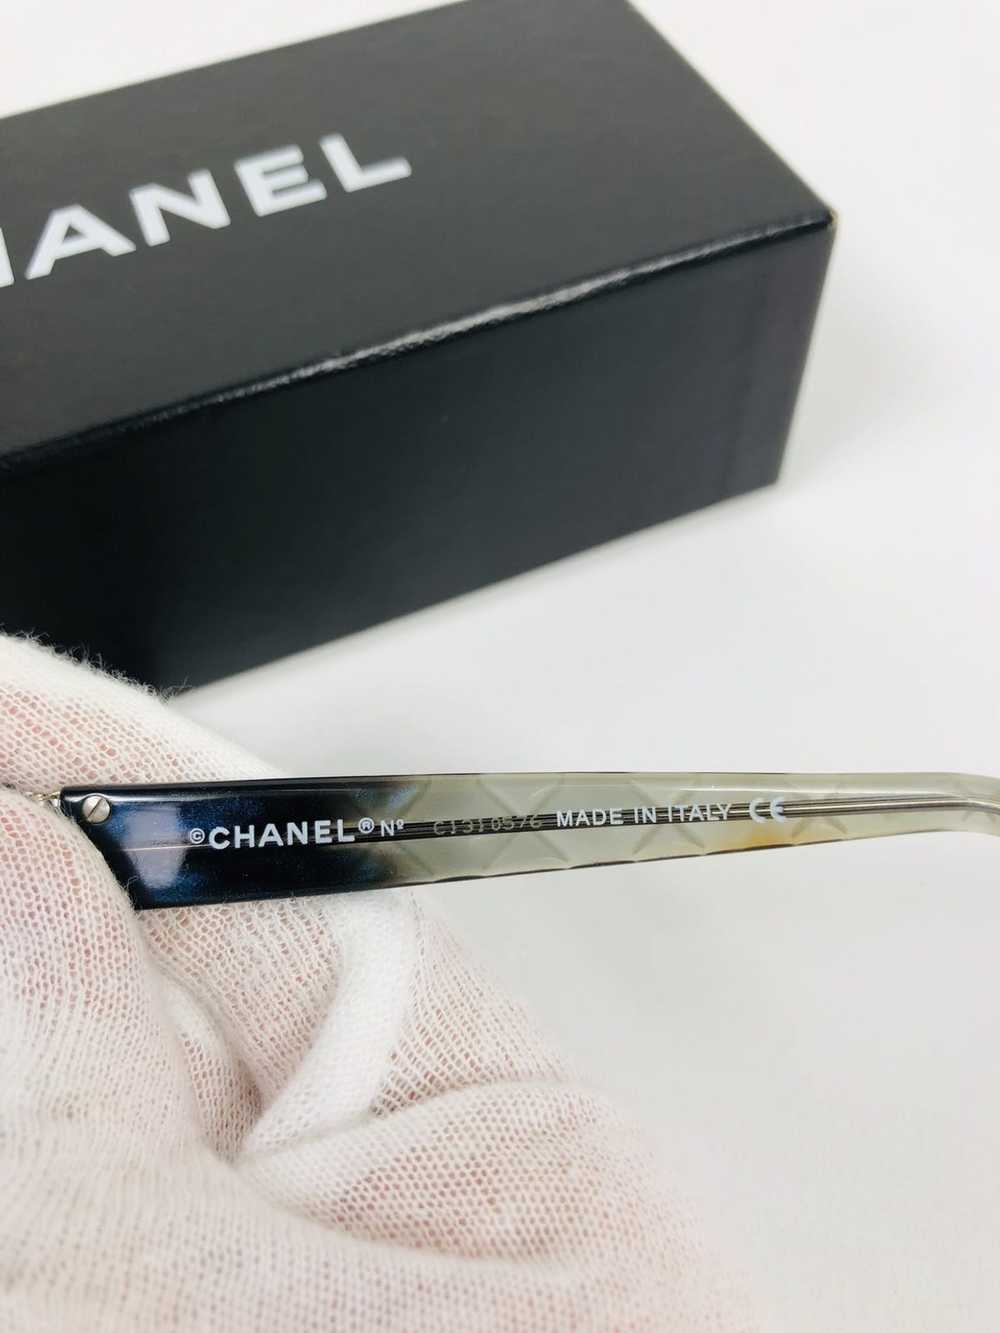 Chanel Chanel cc logo sunglasses - image 5